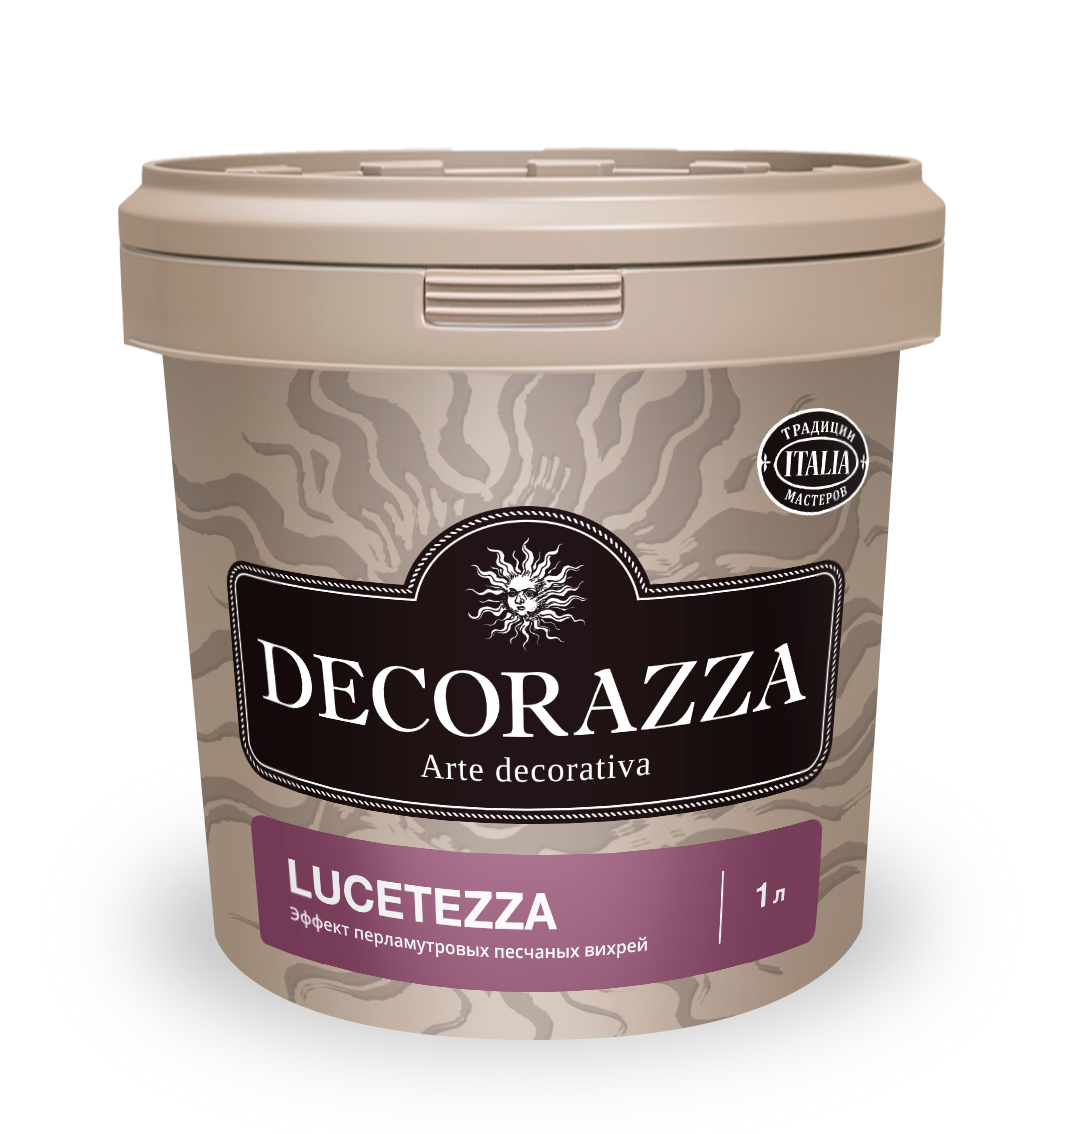 Декоративная штукатурка Decorazza Lucetezza Alluminio LC 700, 1 л декоративная штукатурка decorazza velluto vt 001 5 кг